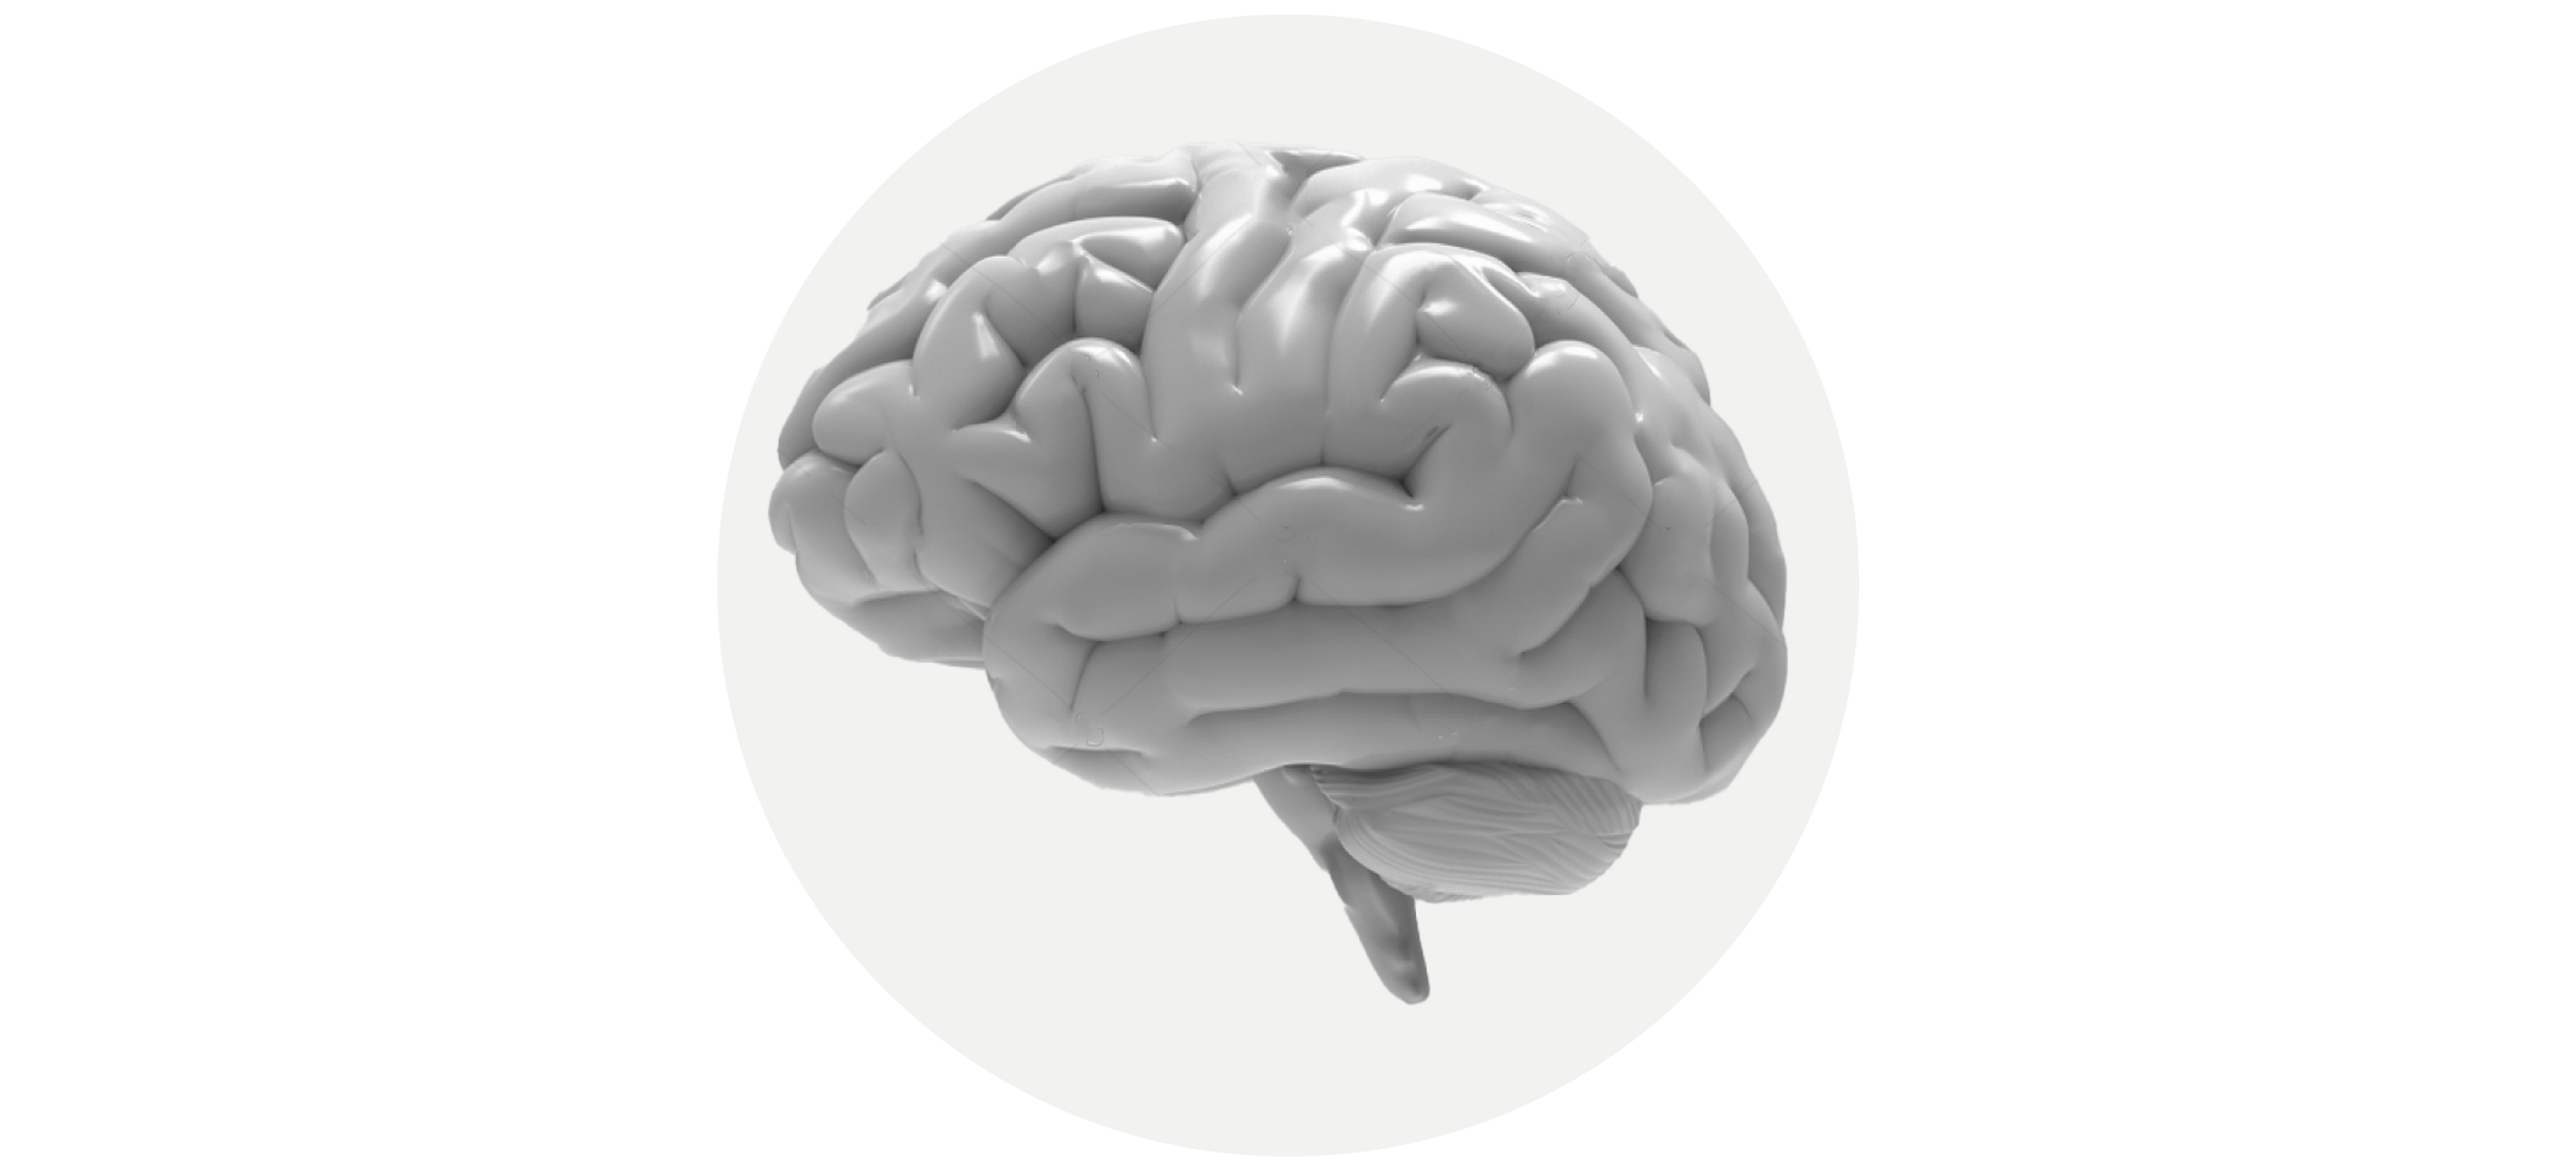 3D brain representation